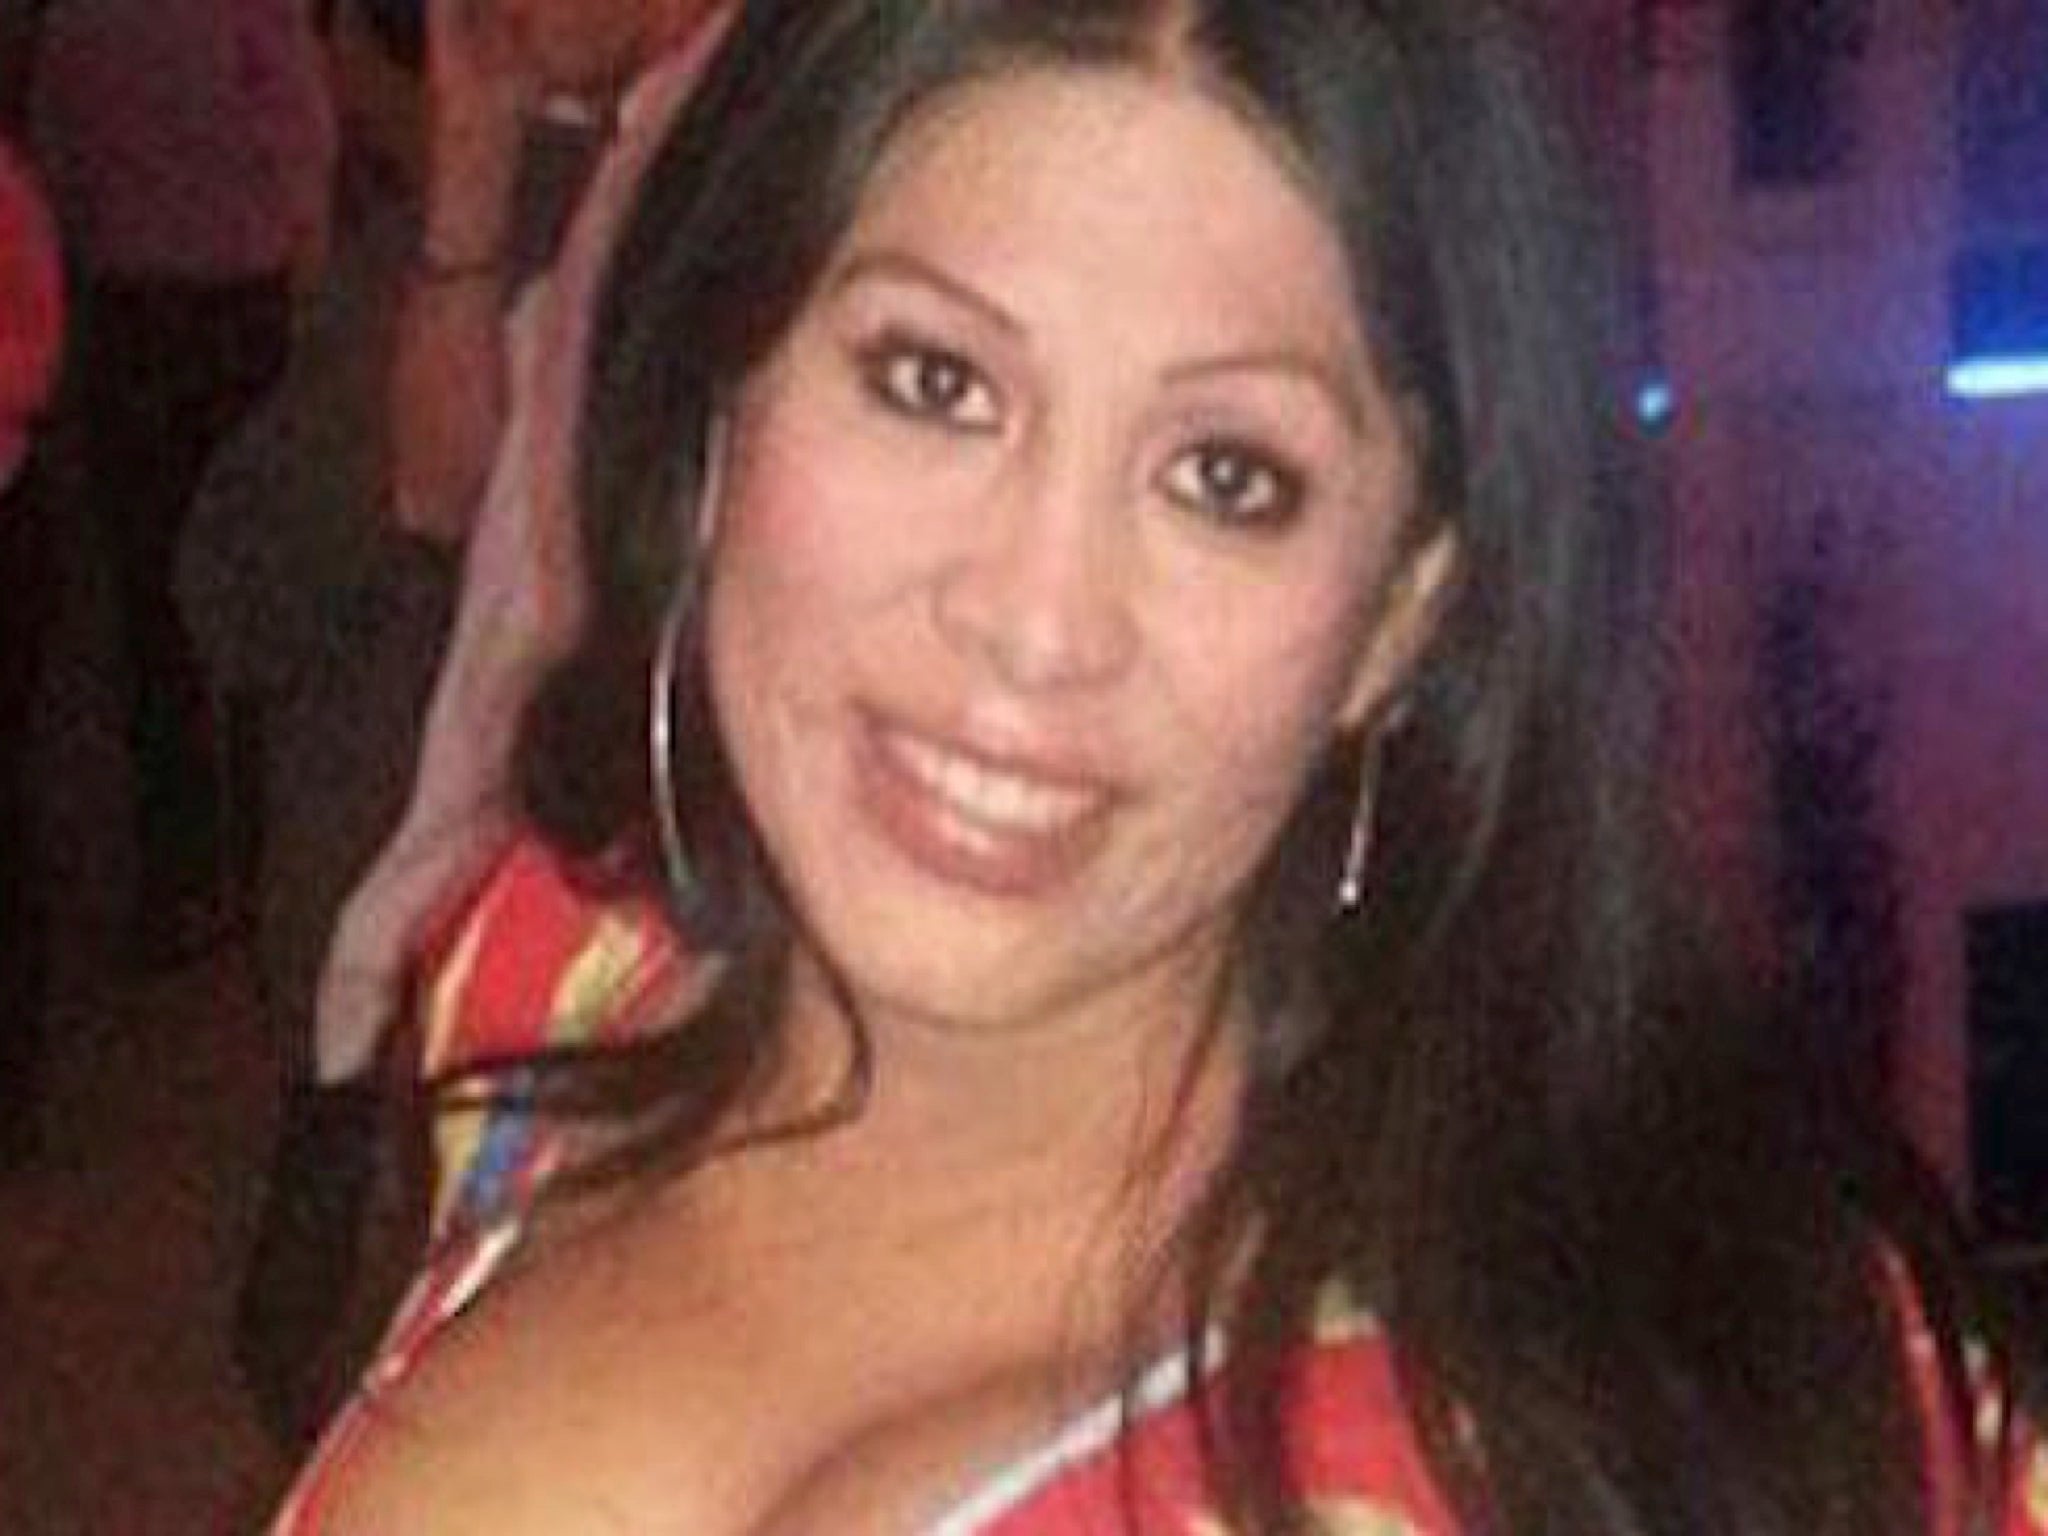 Tamara Dominguez was killed in Kansas City